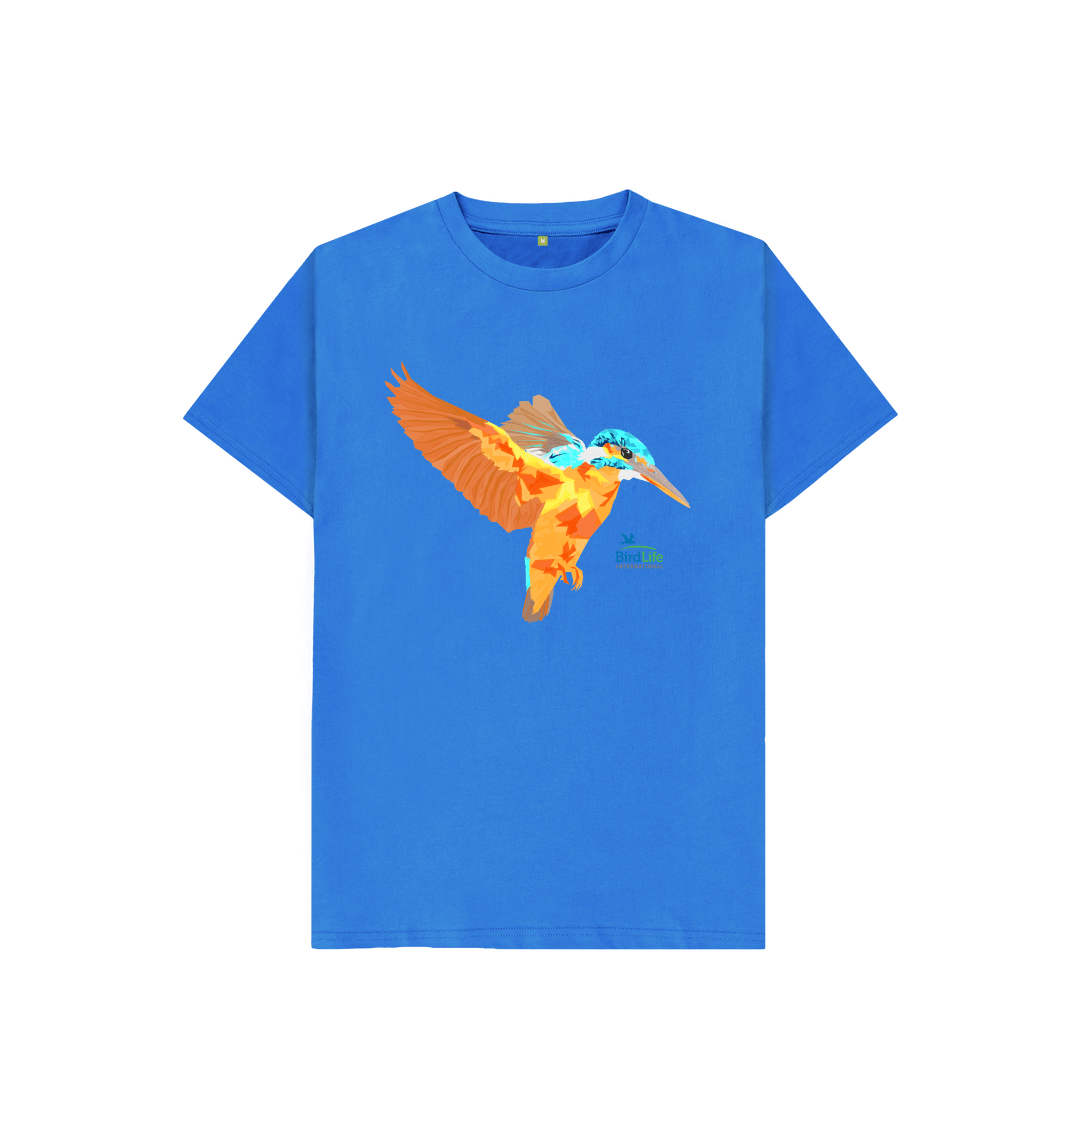 Shirts ◂ The KingFisher